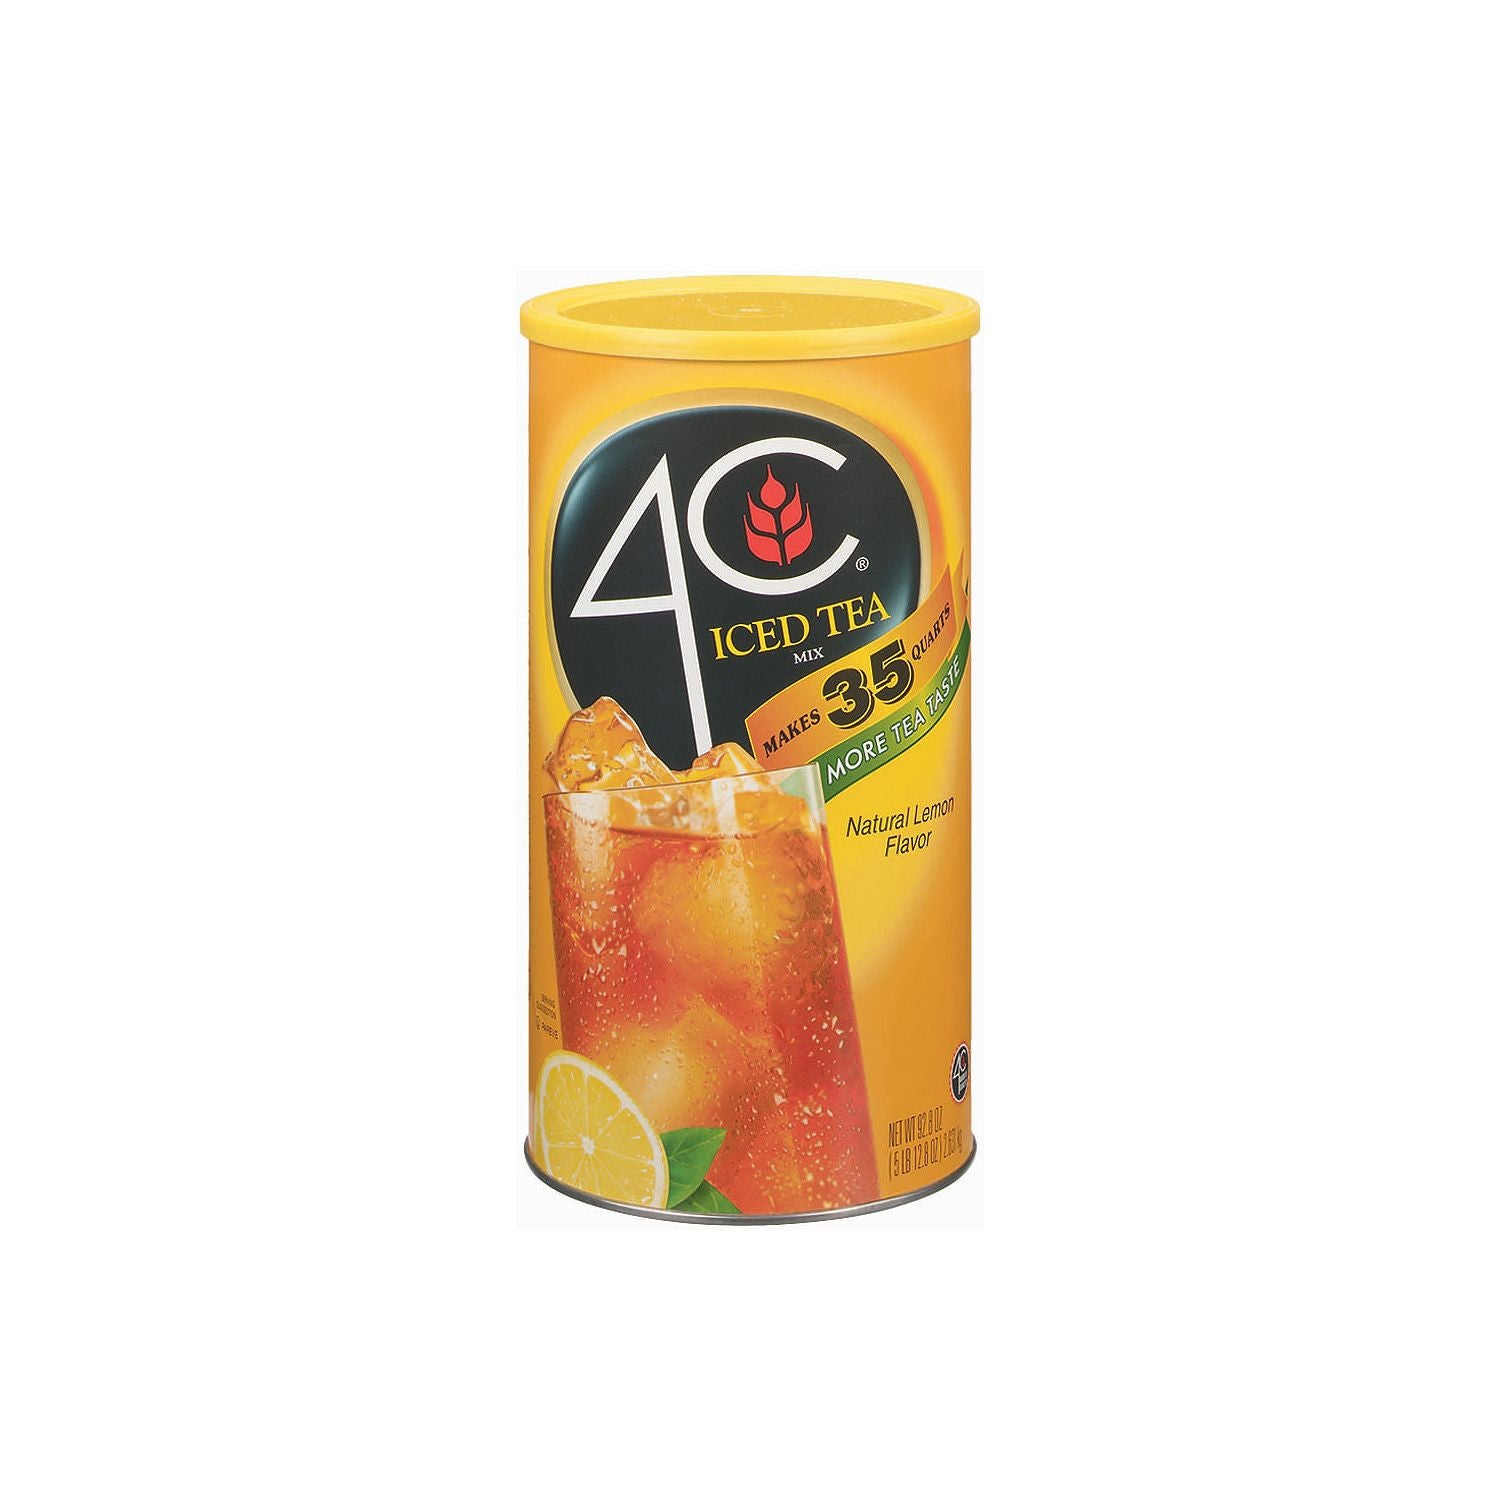 4C Lemon Iced Tea 50% Less Sugar, 60 qt.